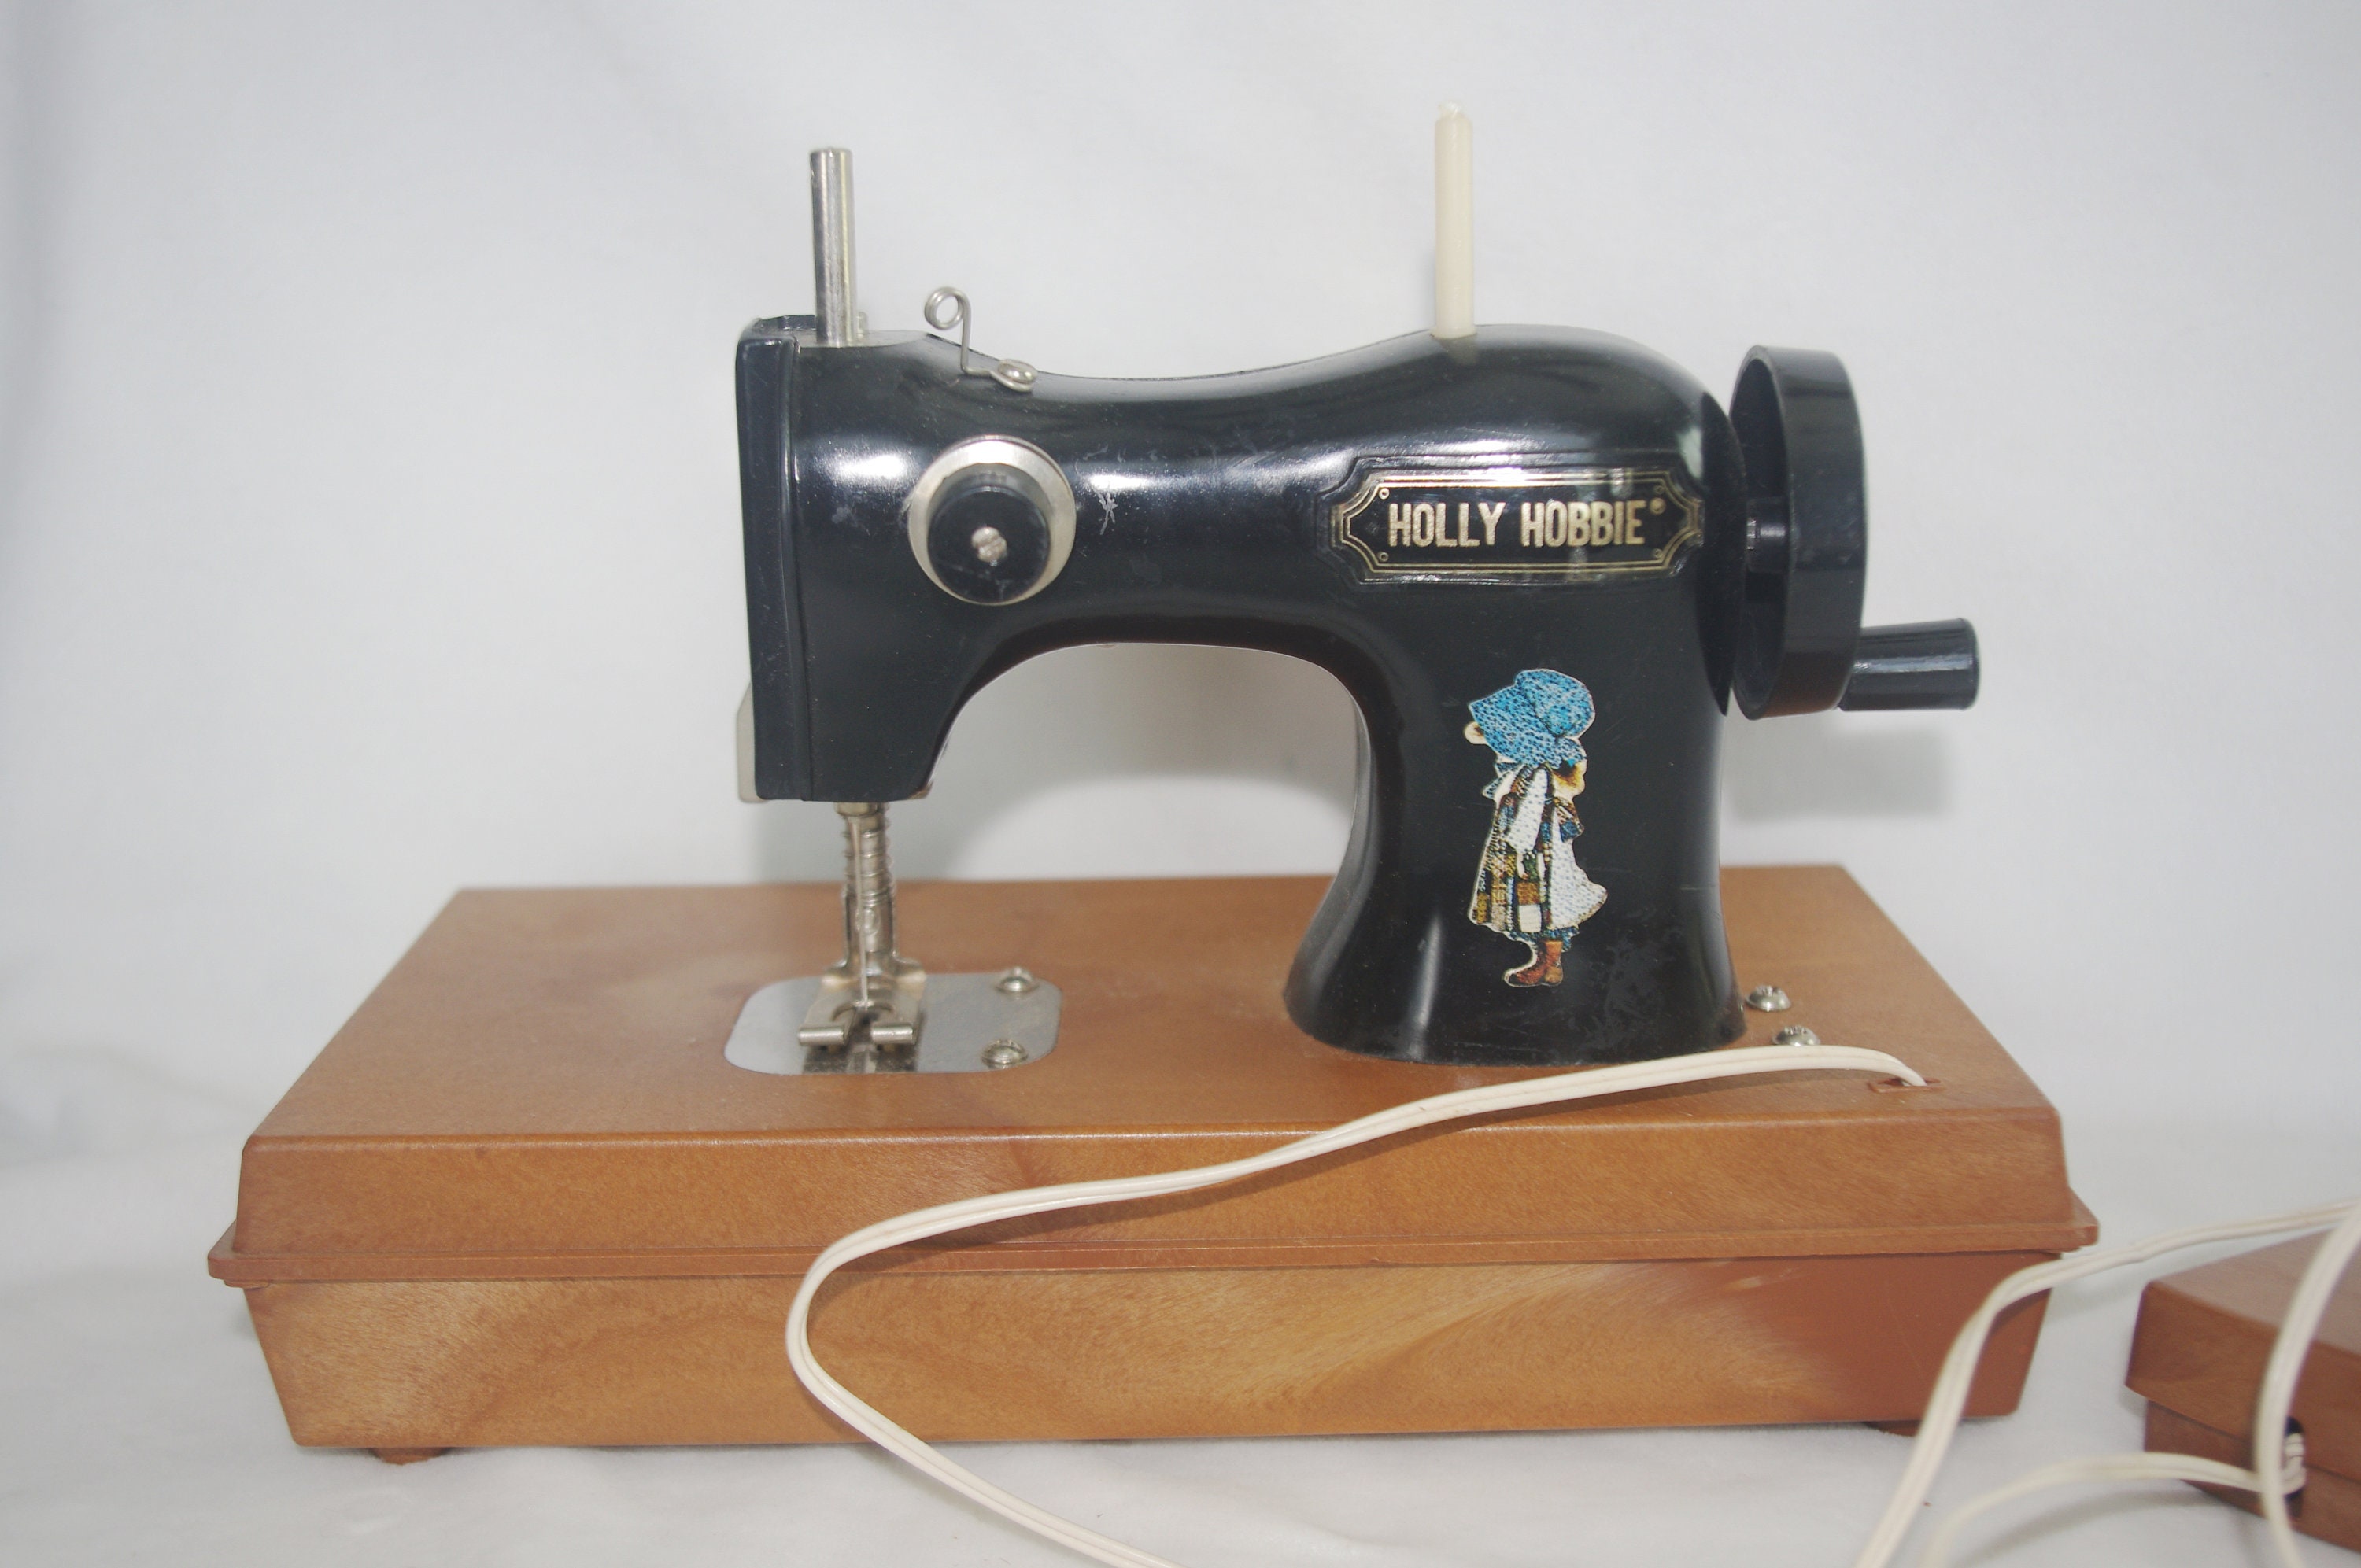 Vintage Toy / Child's / Kid's Sewing Machine: 1970s Holly Hobbie